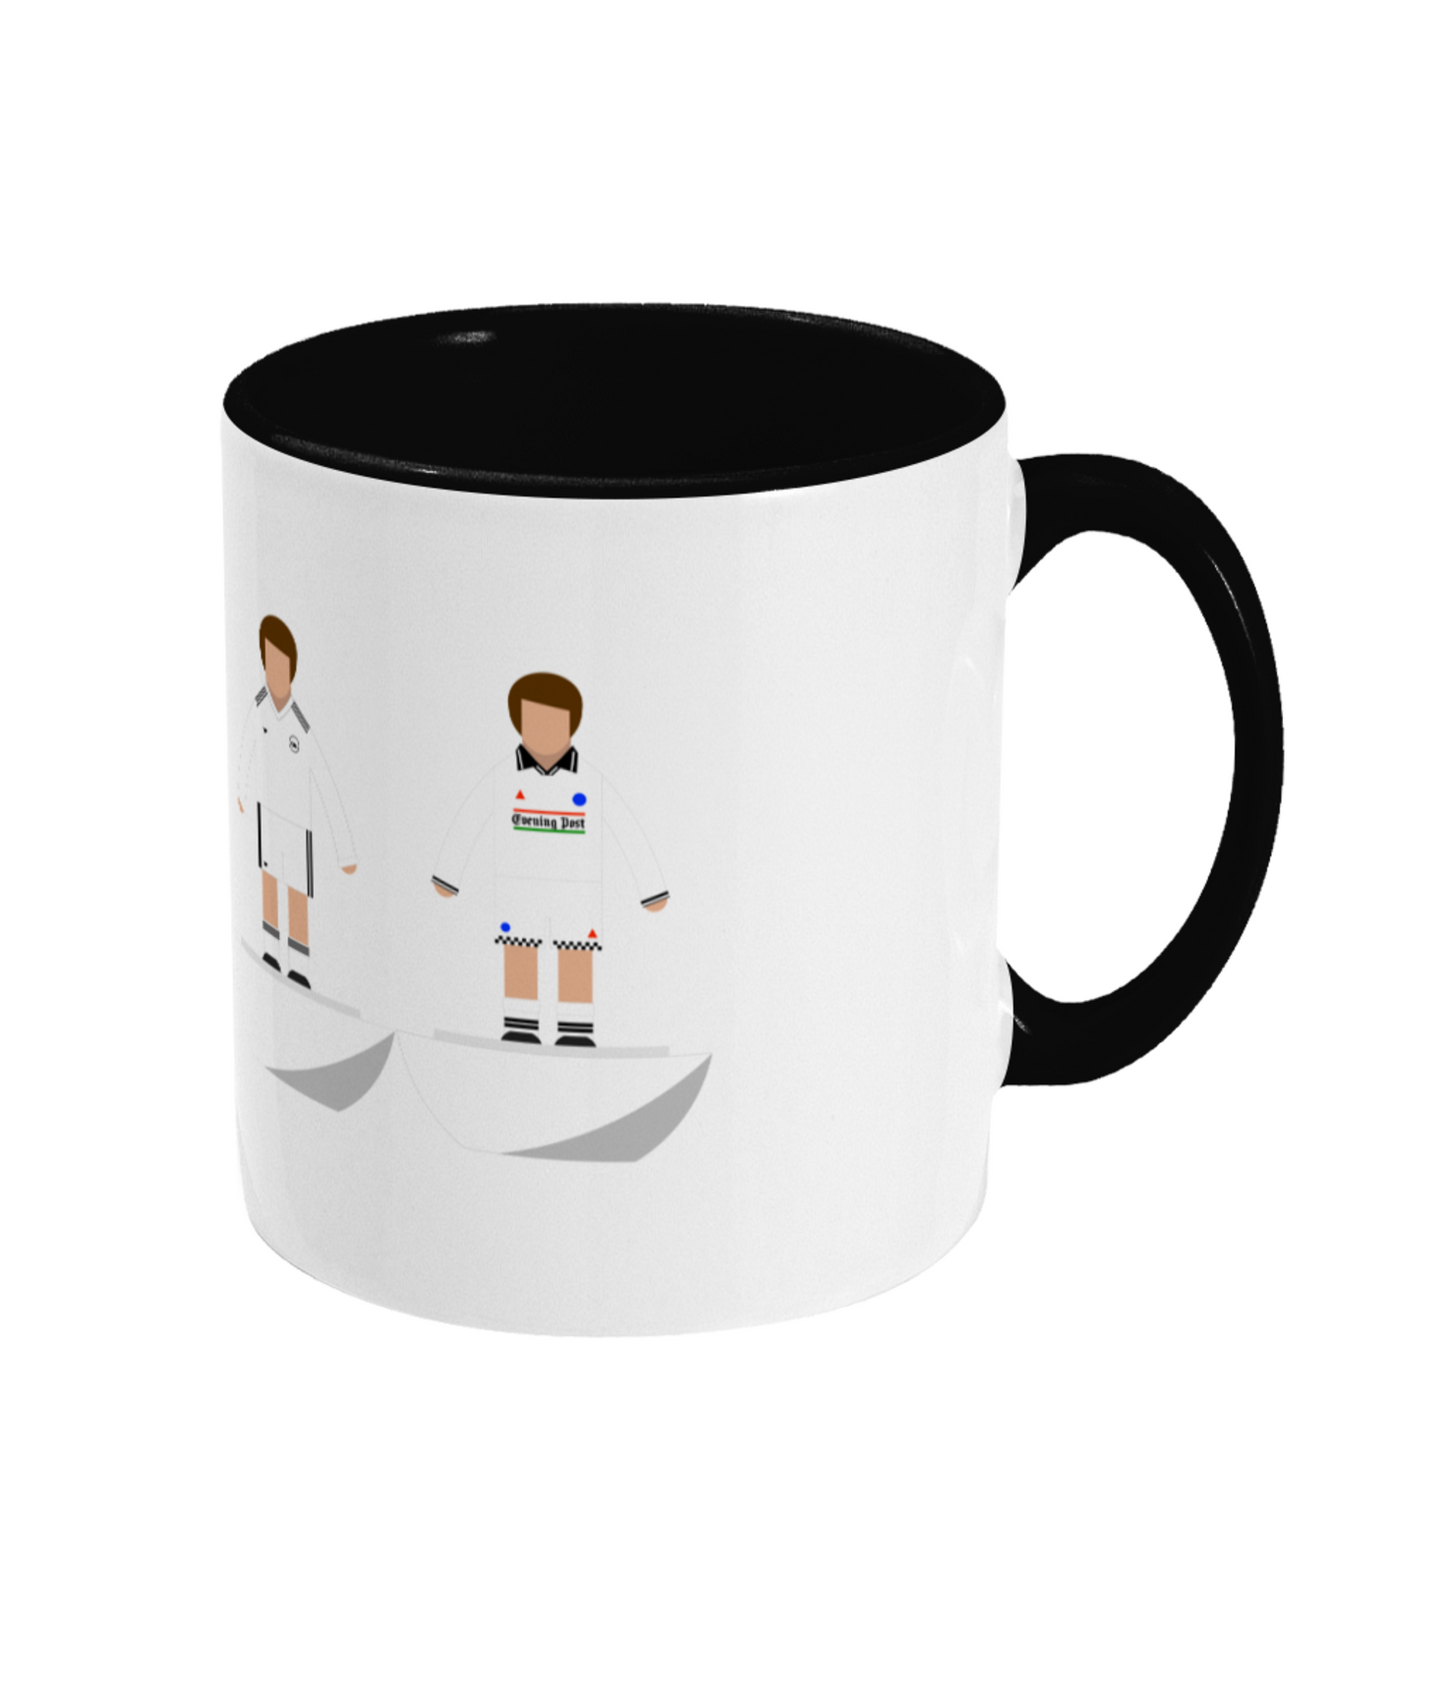 Football Kits 'Swansea City combined' Mug